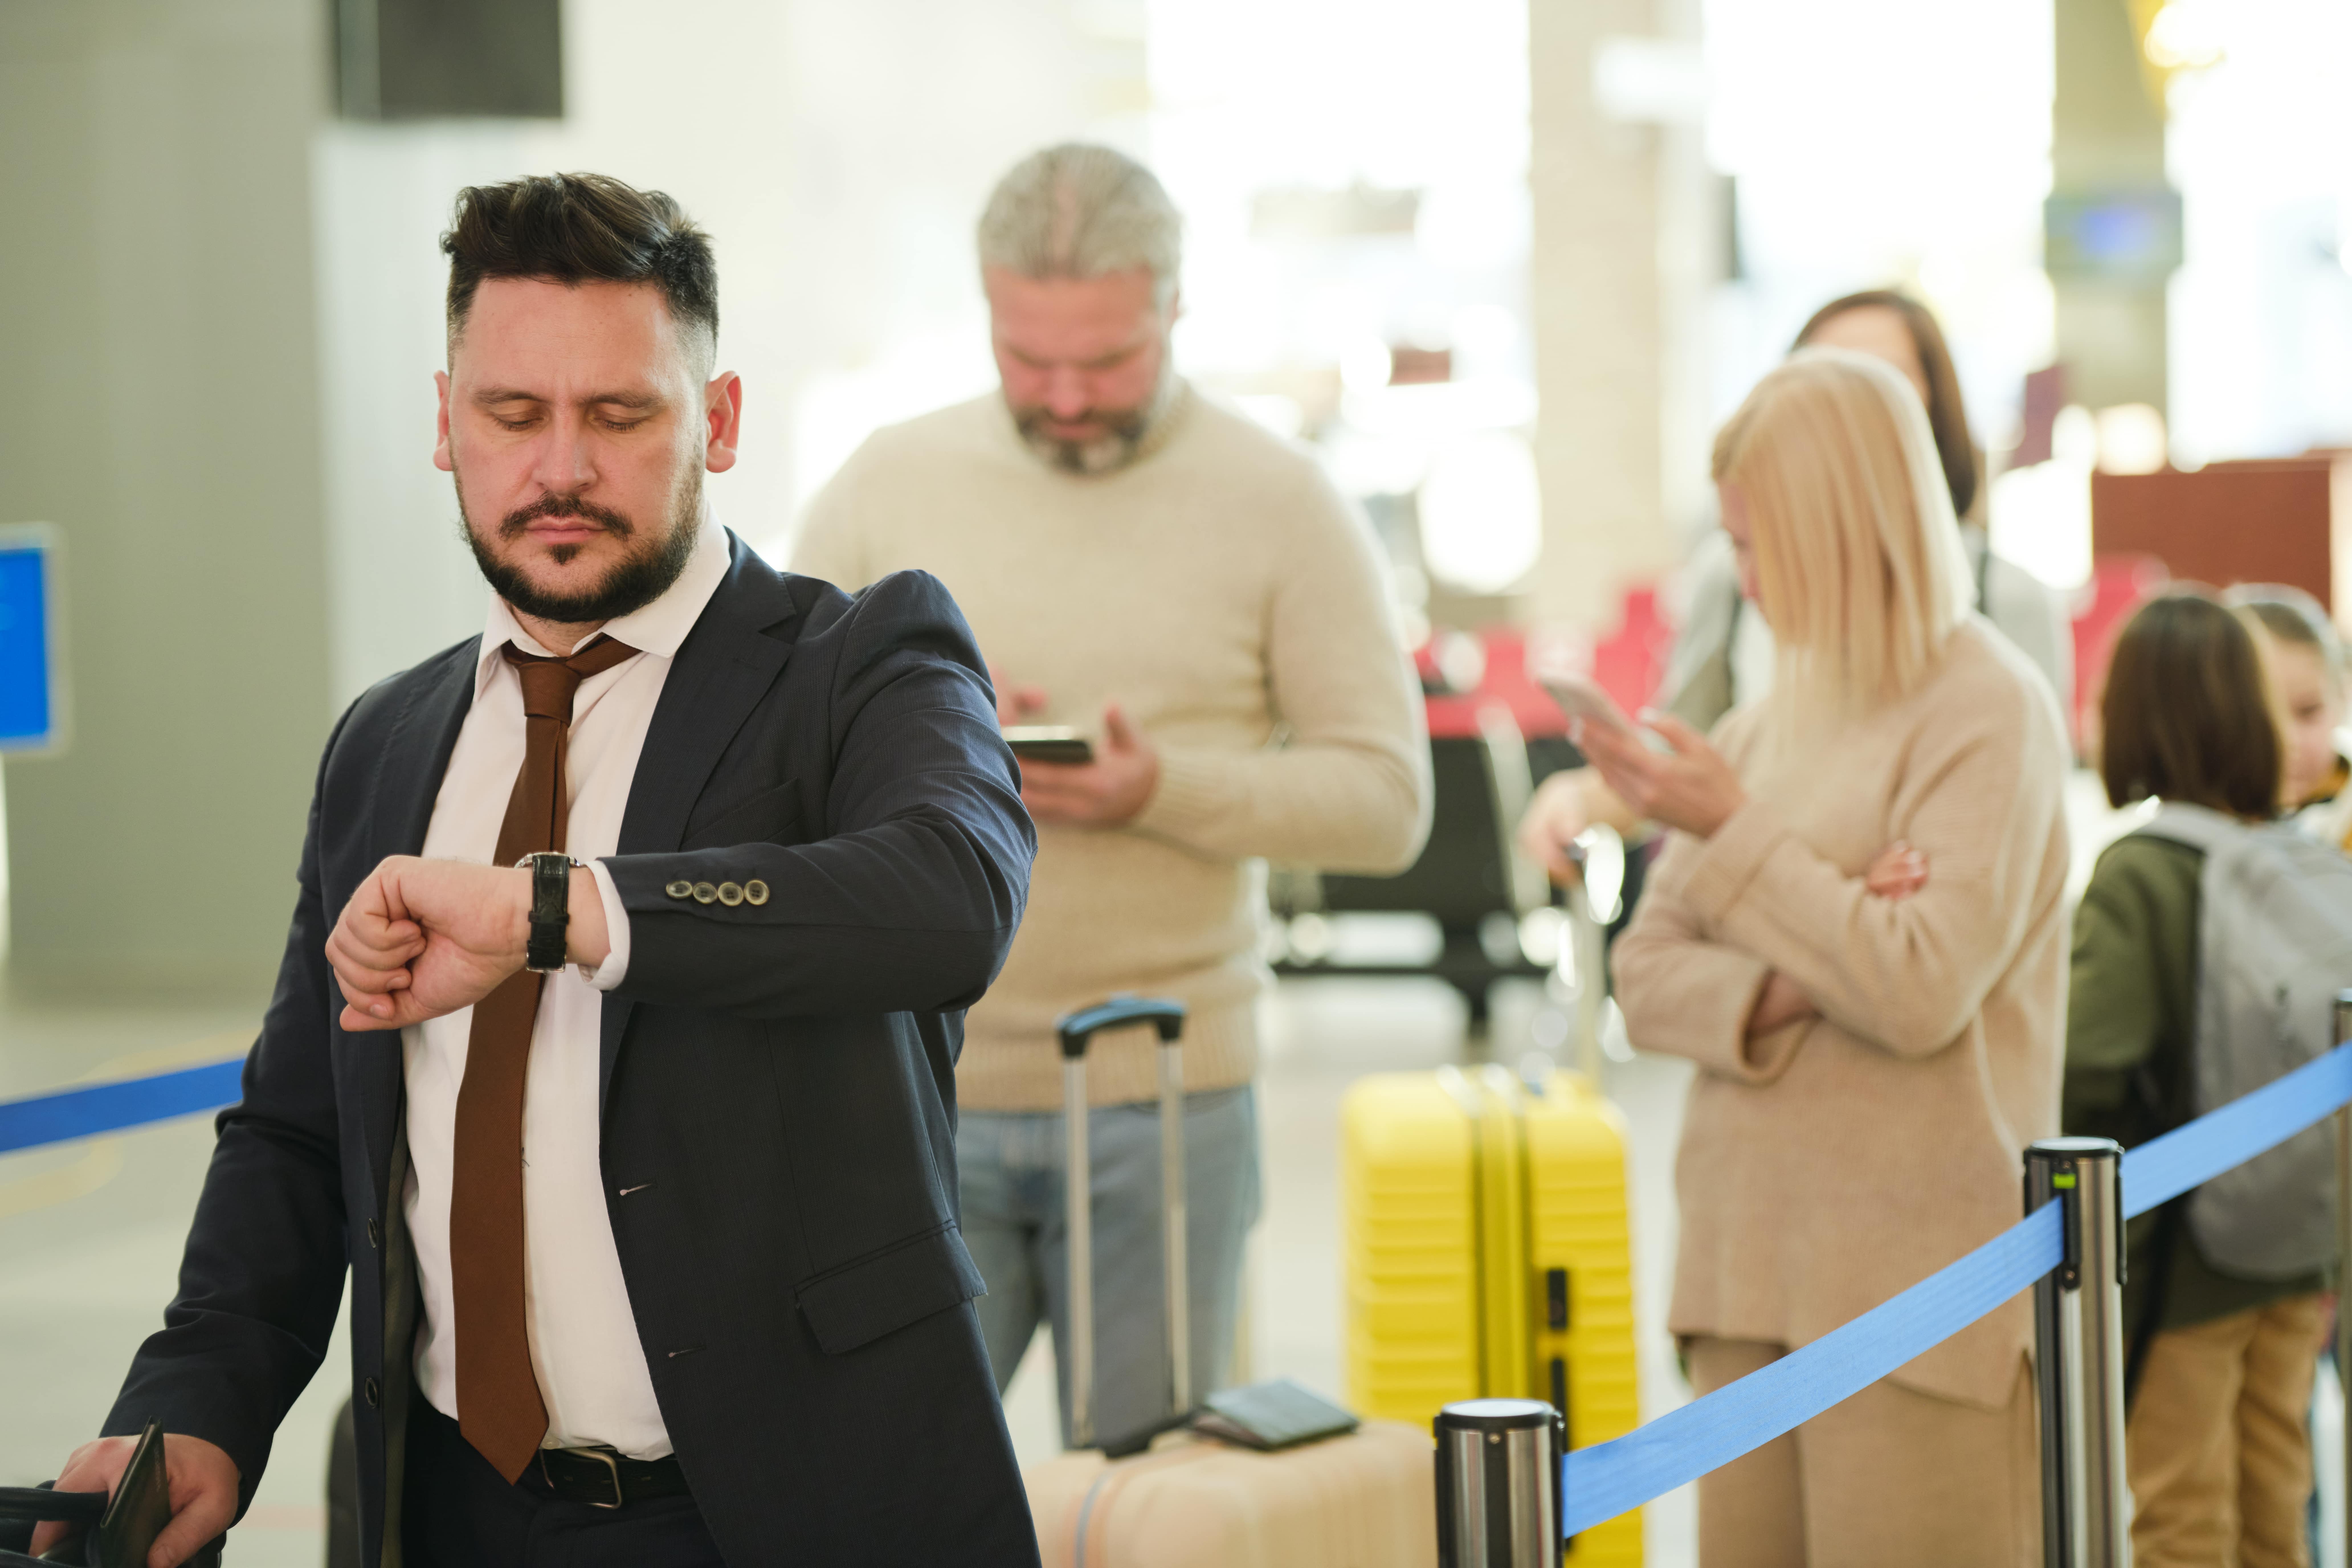 man queueing at the airport, looking at his watch